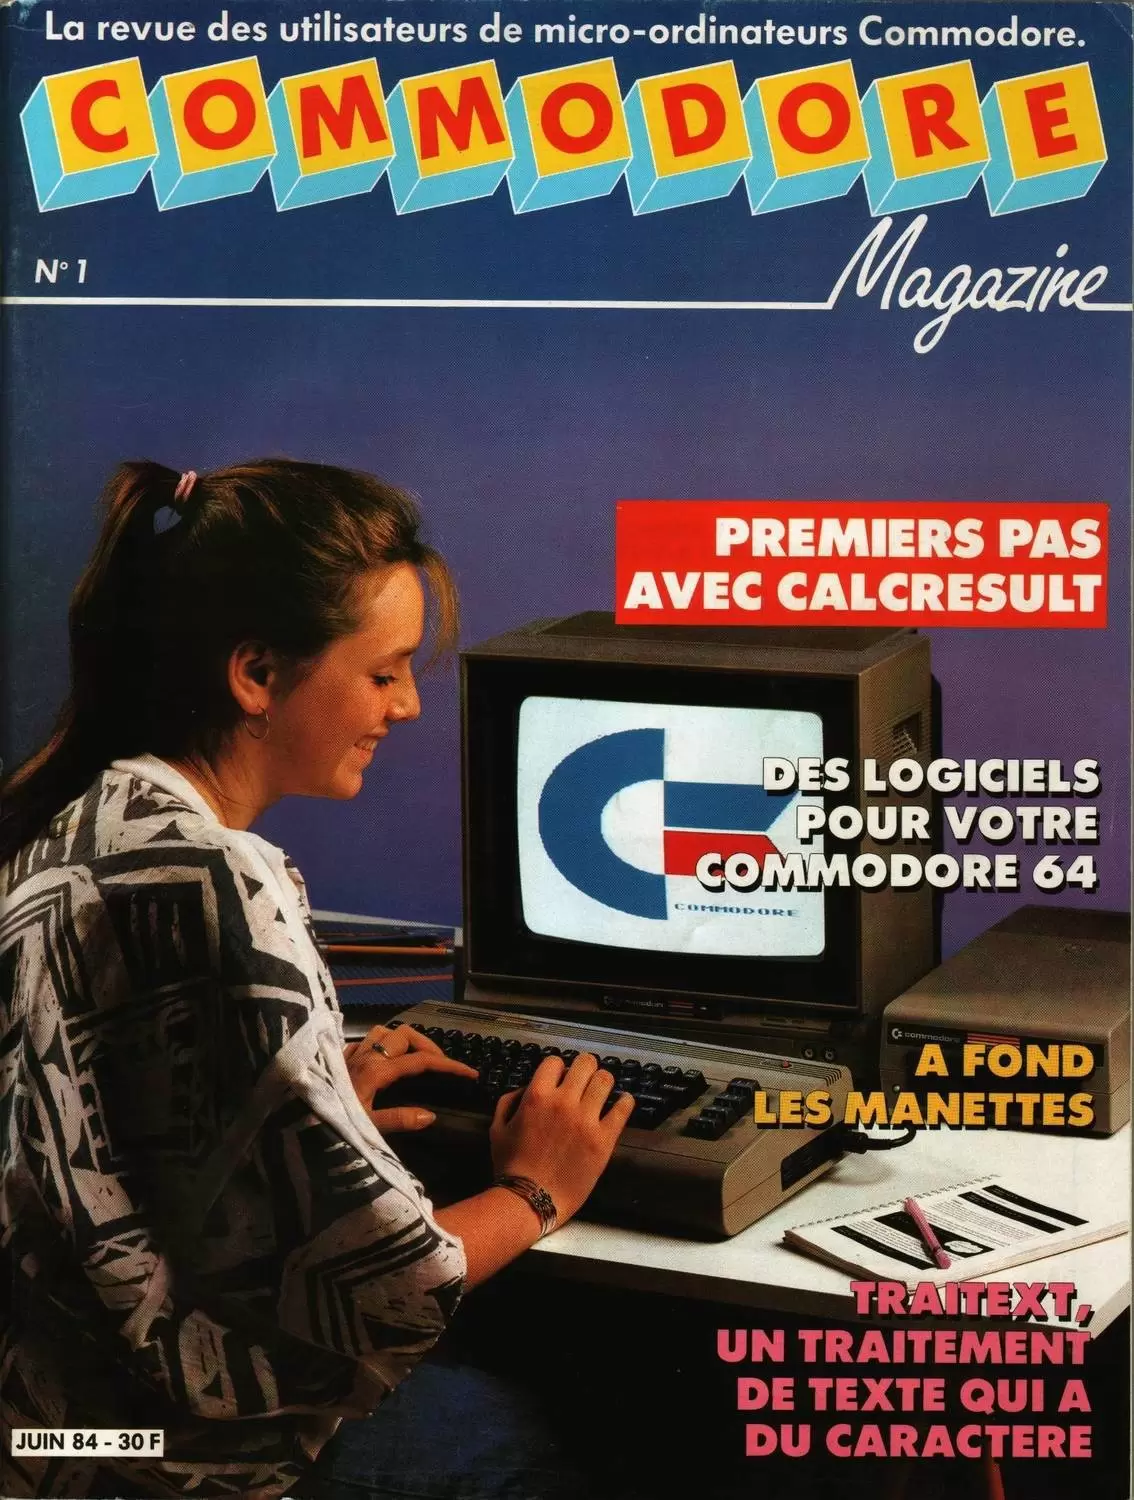 Commodore Magazine - Commodore Magazine n°1